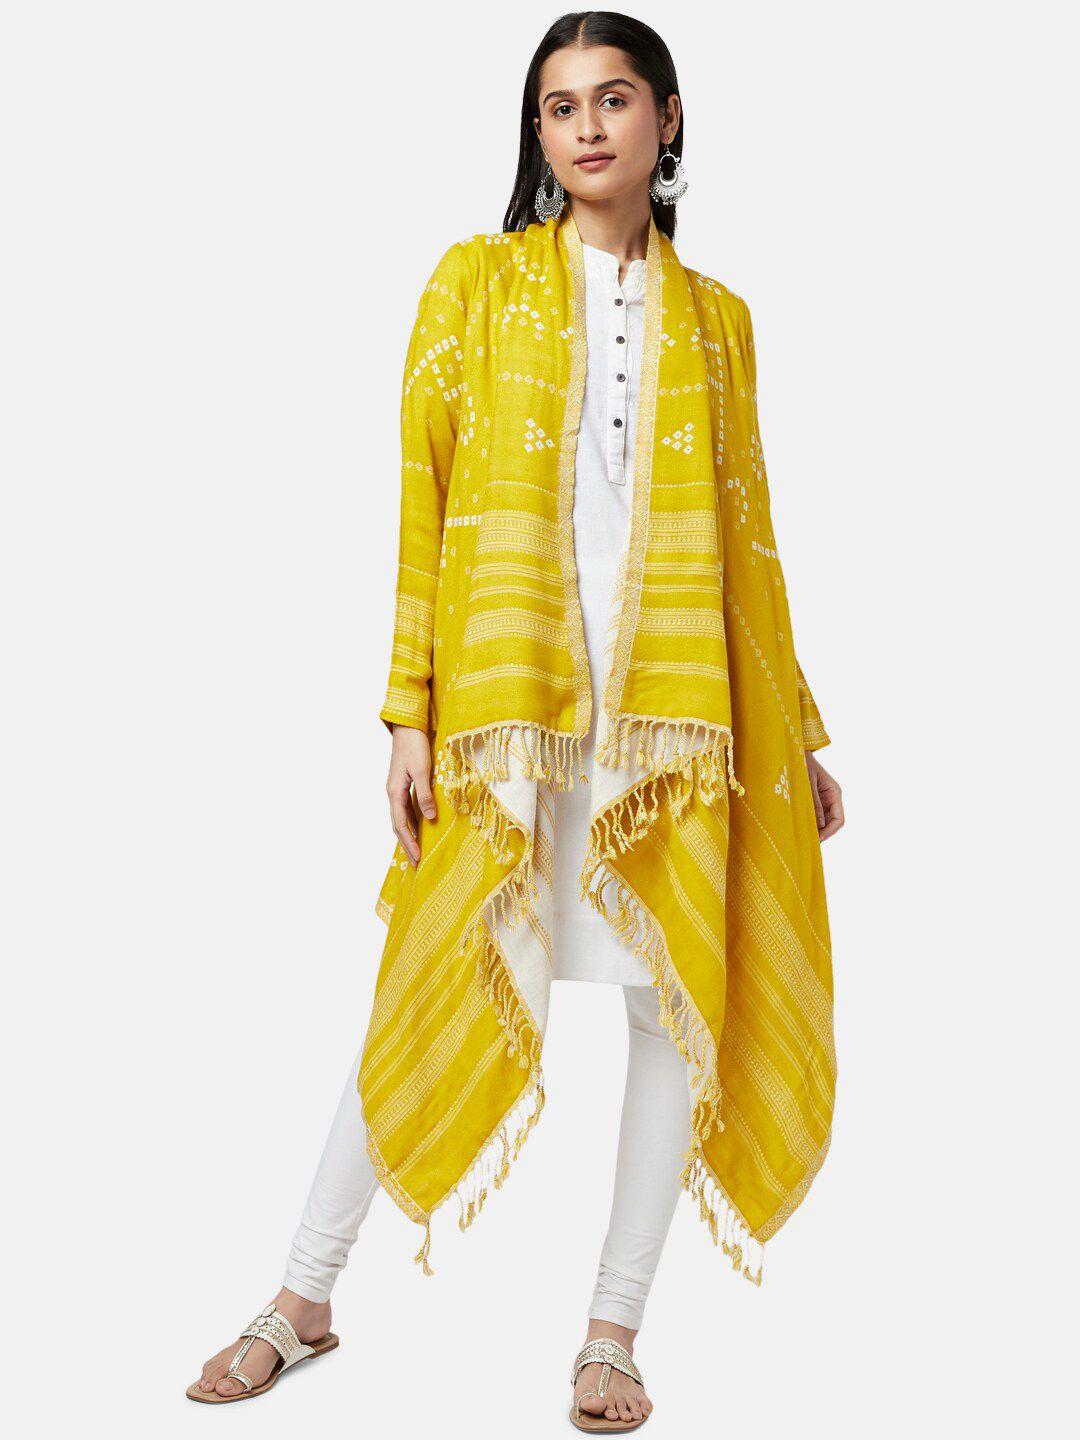 rangmanch by pantaloons women mustard & white printed acrylic longline shrug